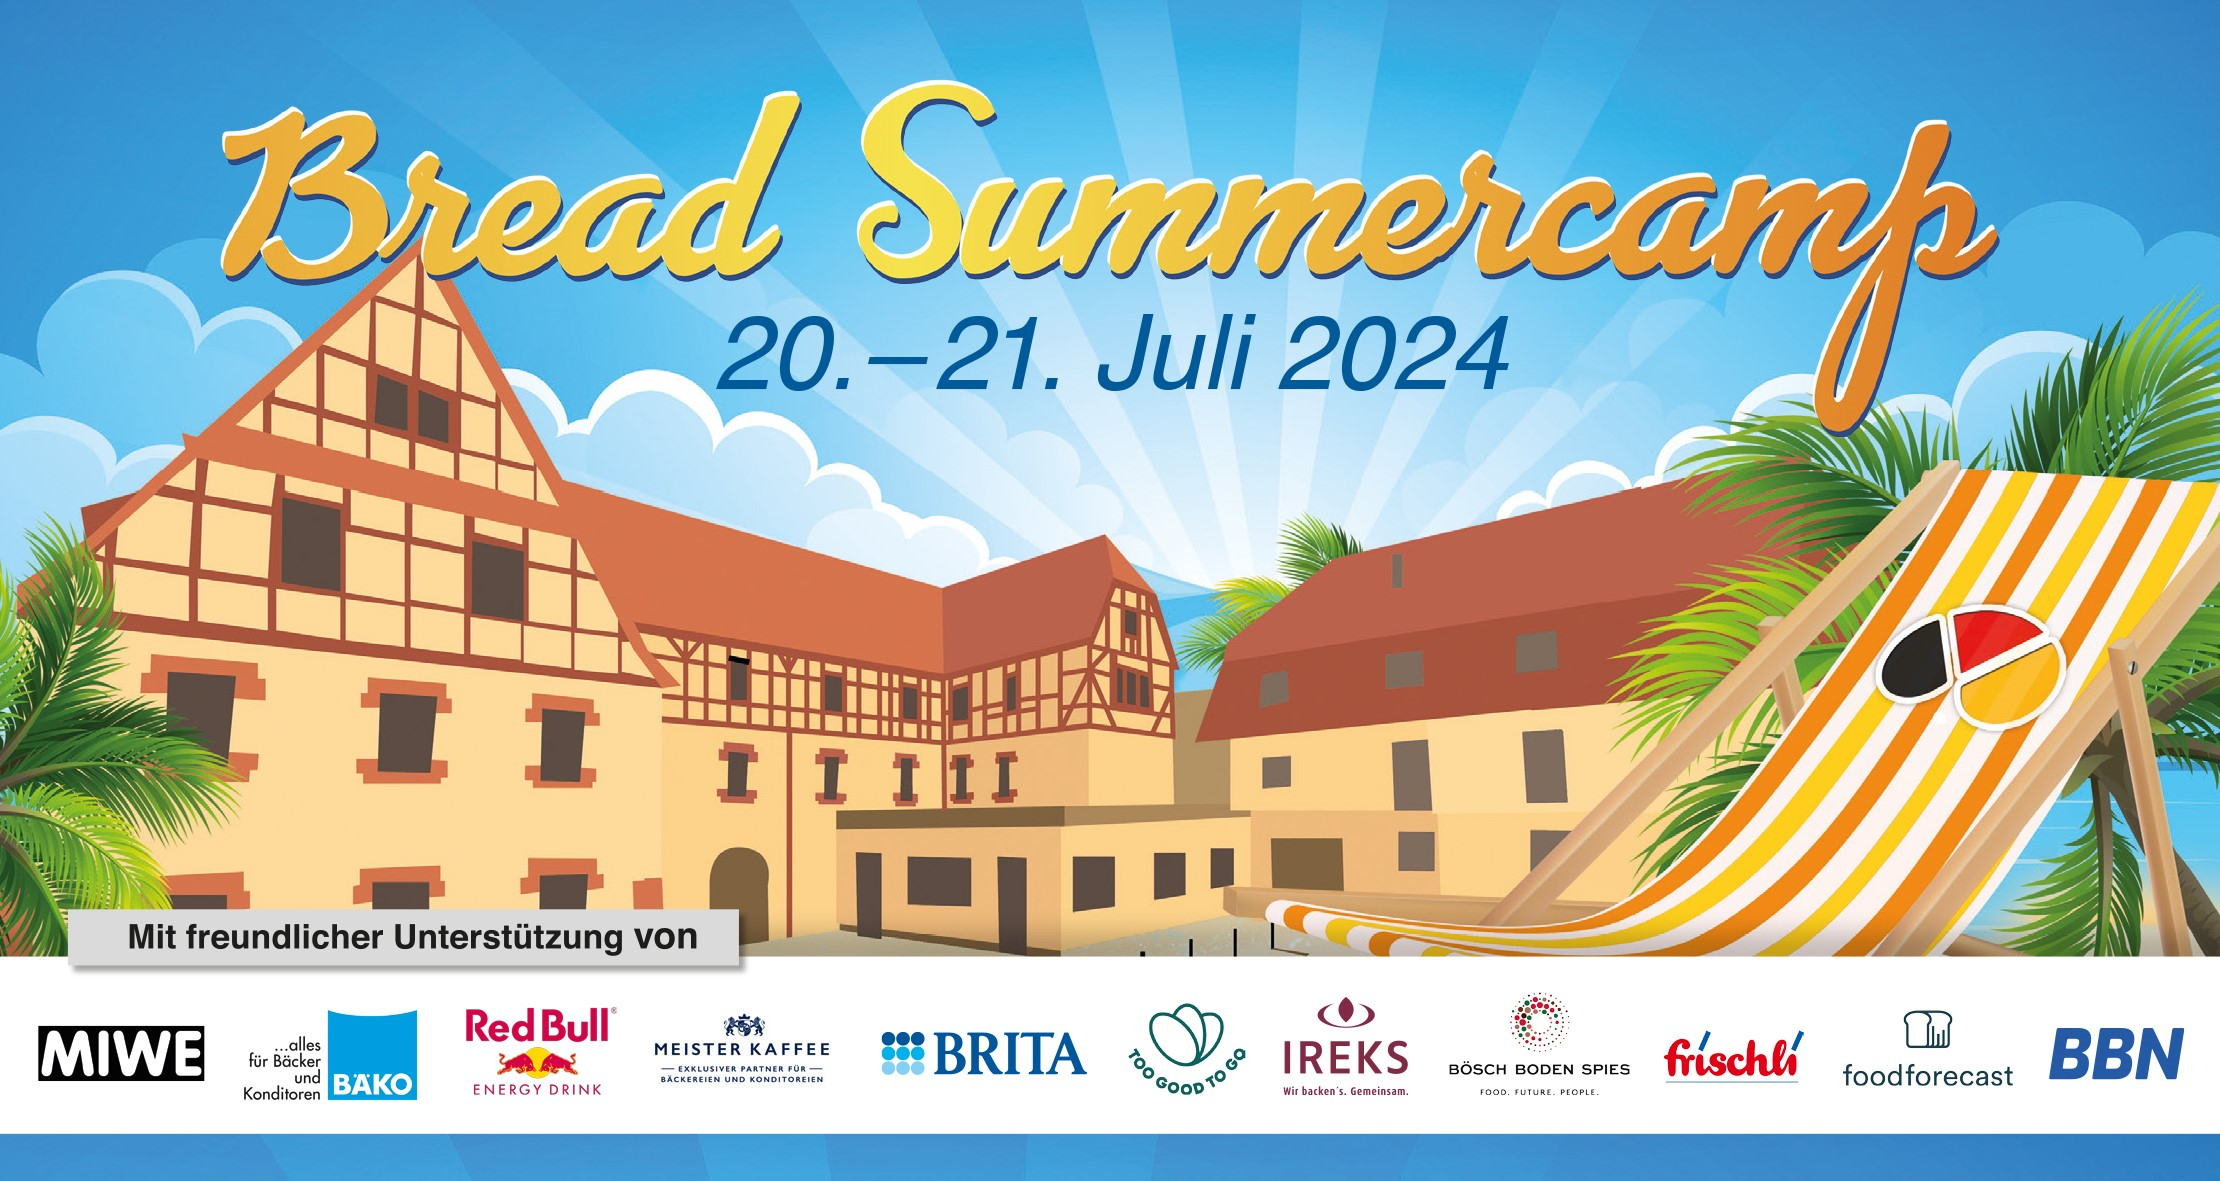 Bread Summercamp 2024